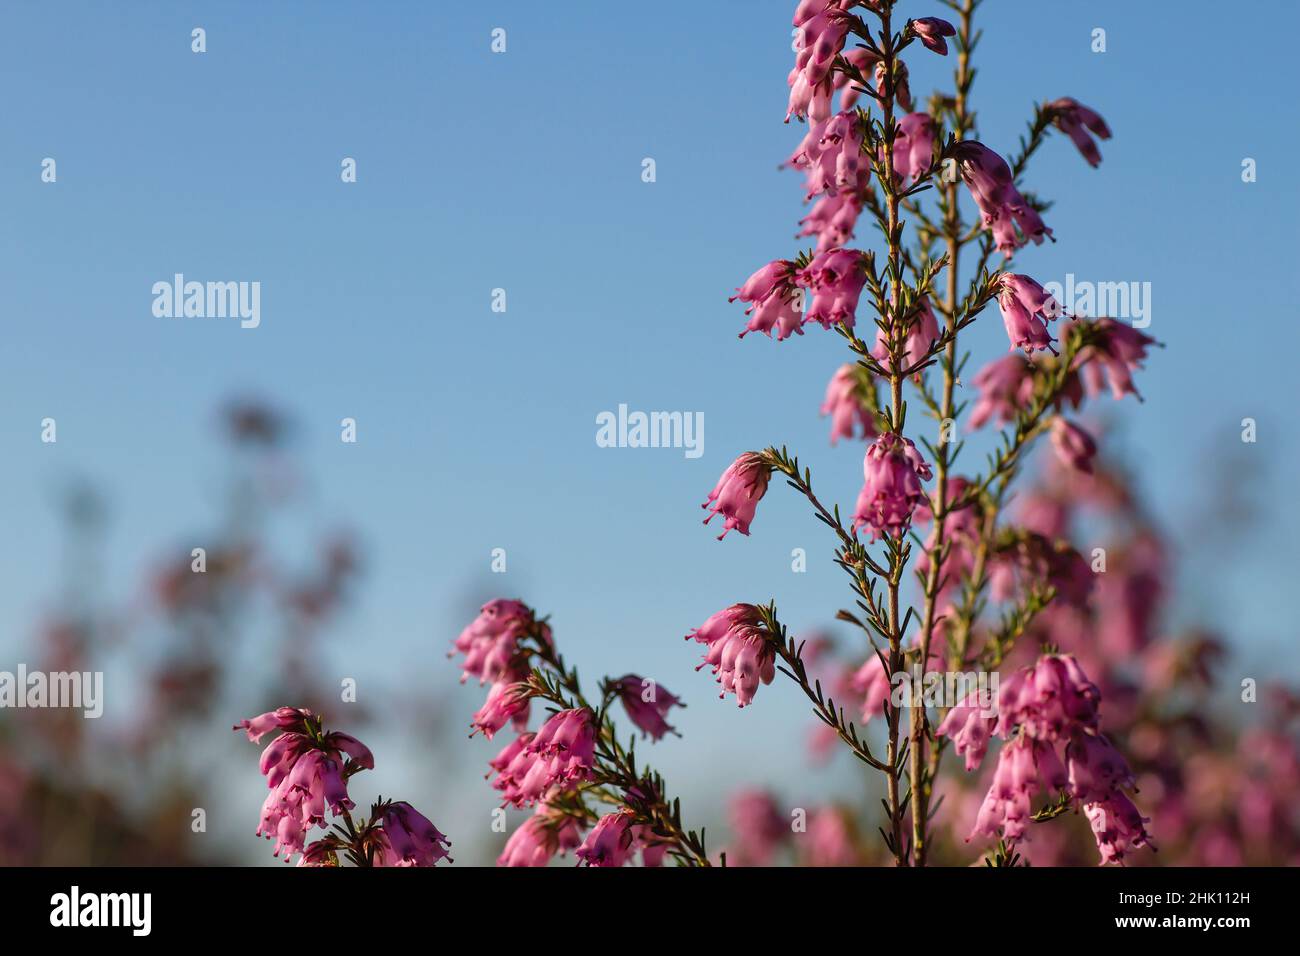 Detail of irish heath - Erica Erigenea - pink flowers blooming in spring Stock Photo